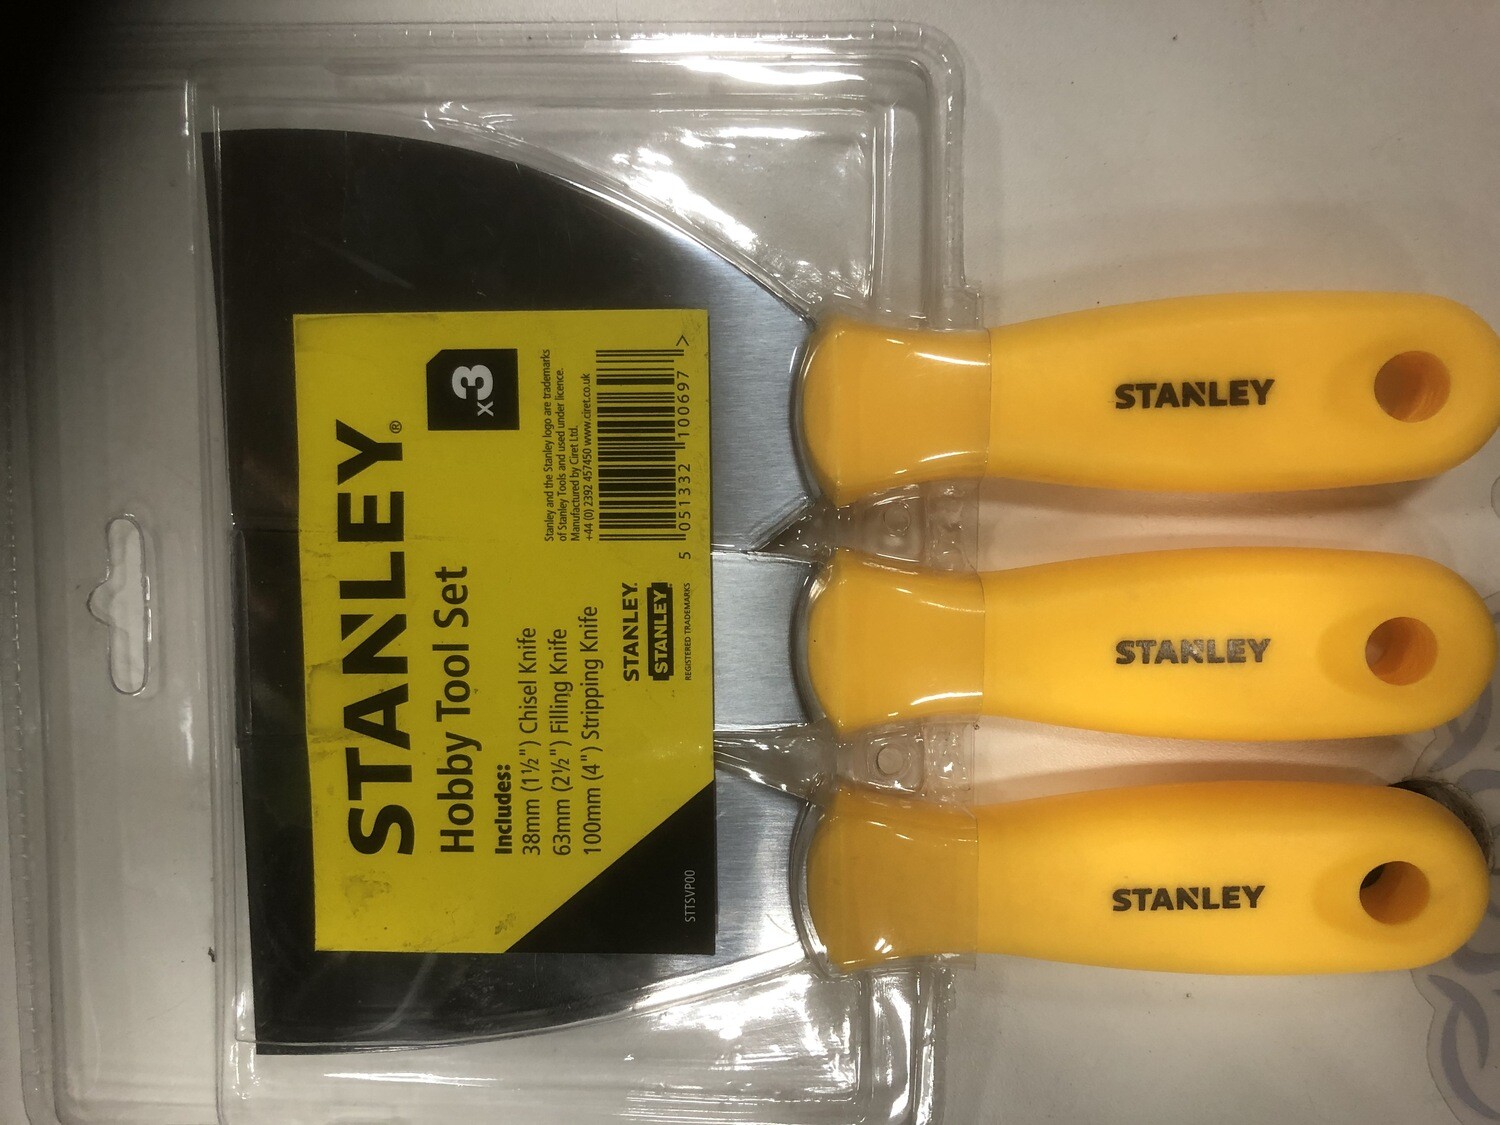 Stanley 3 piece Stripping Knife set